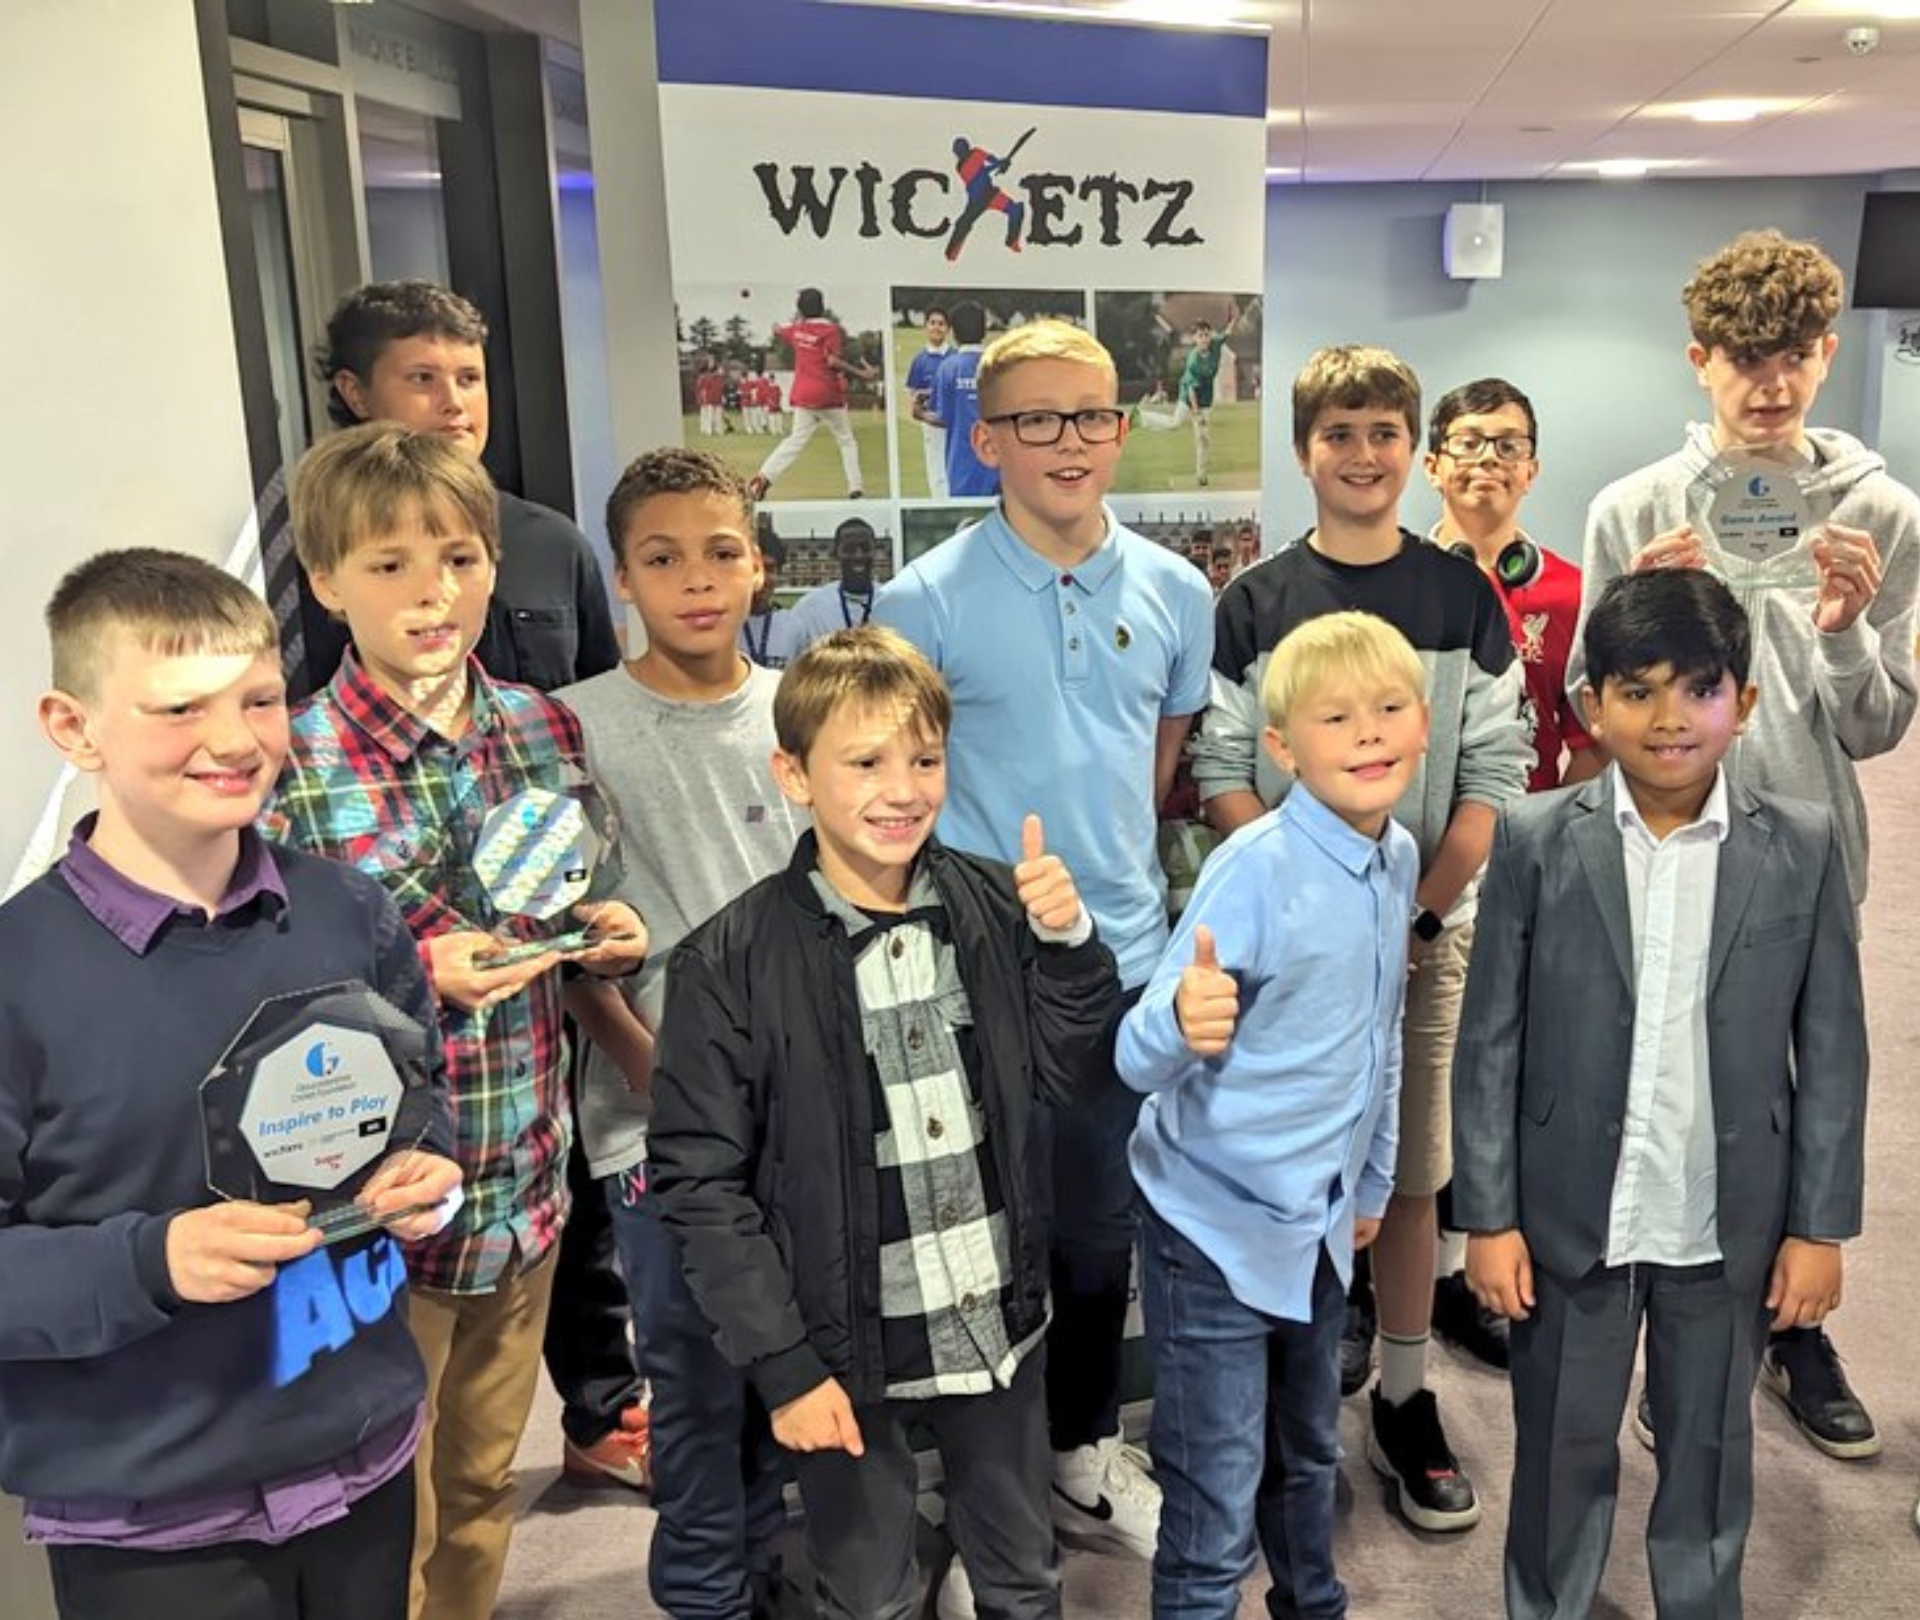 Wicketz award winners with their awards